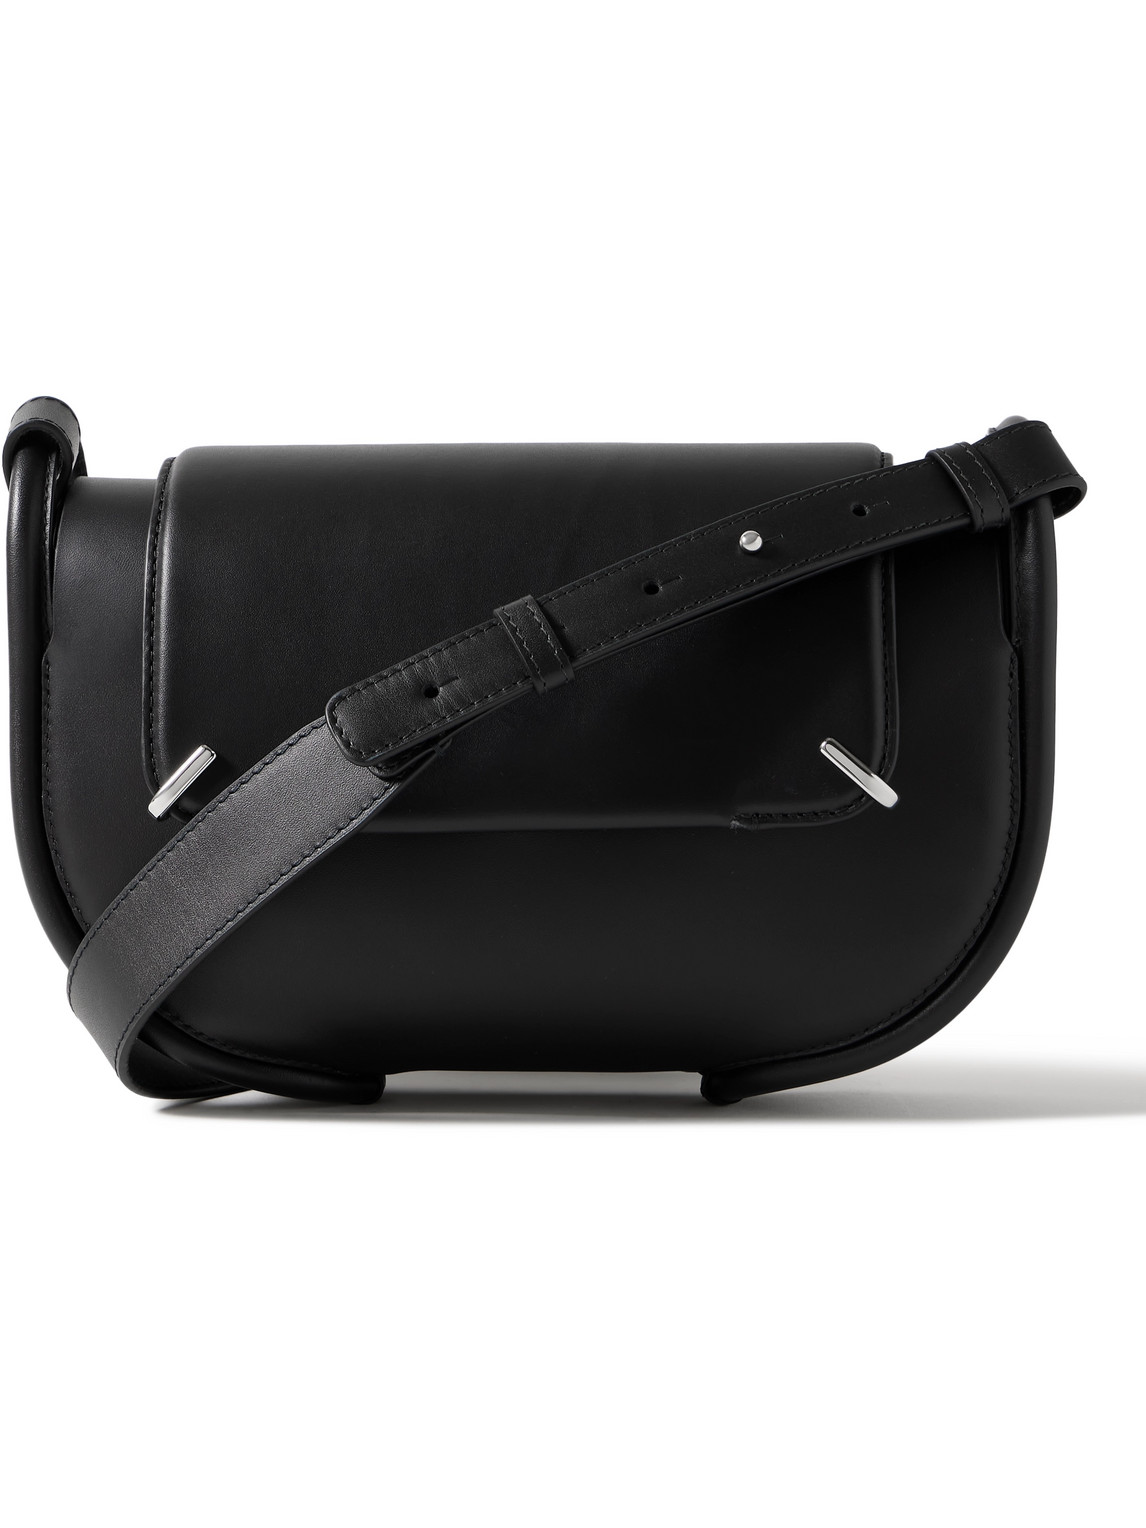 Bonastre Lovni Leather Messenger Bag In Black